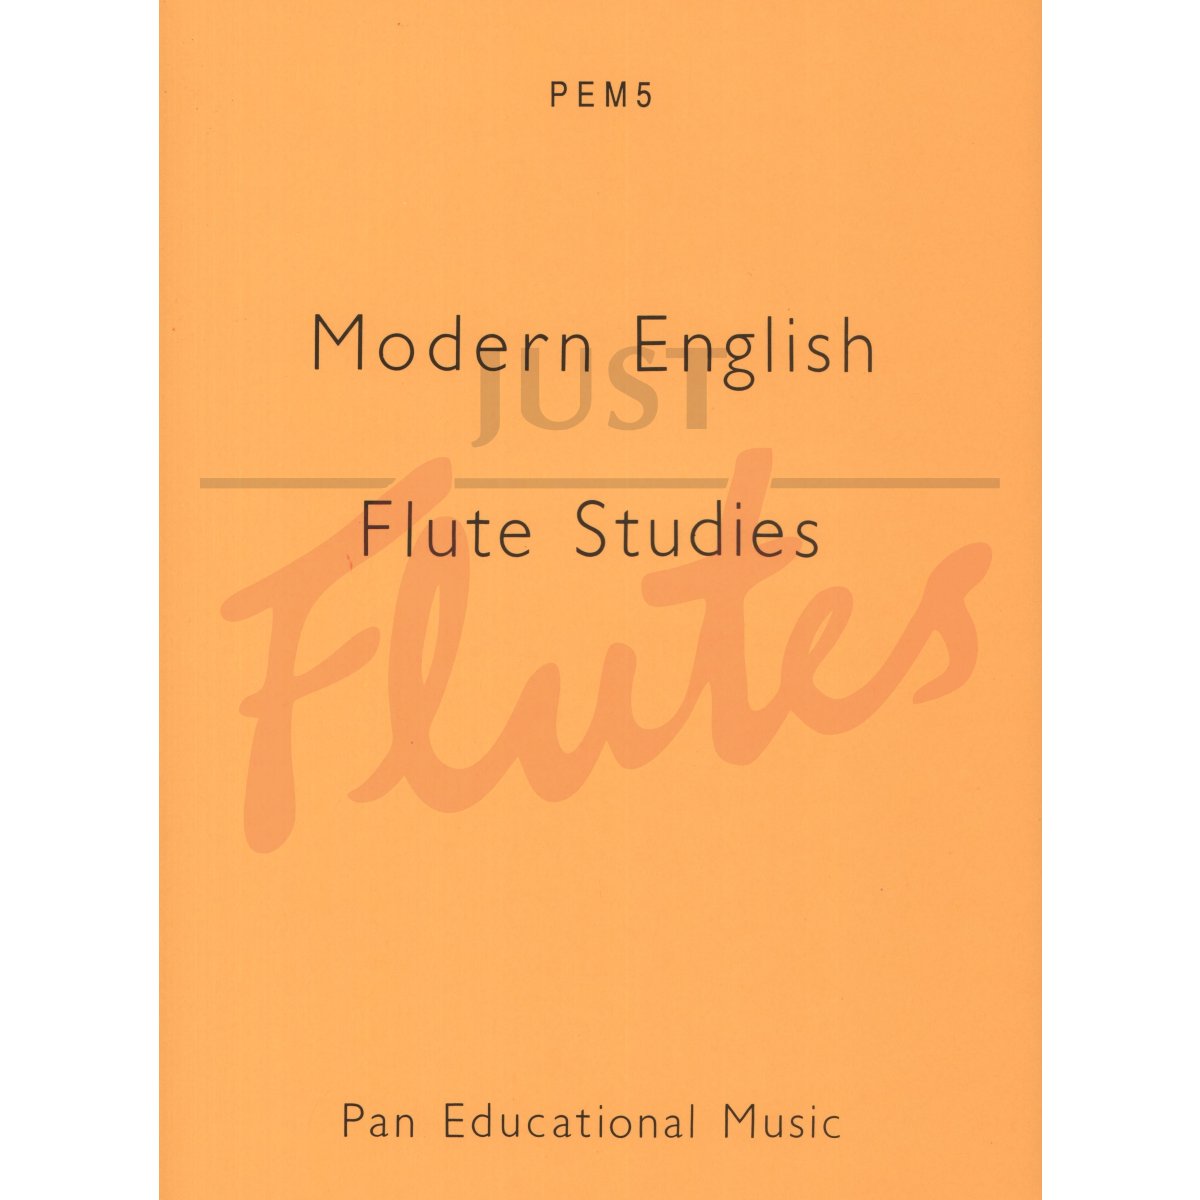 Modern English Flute Studies